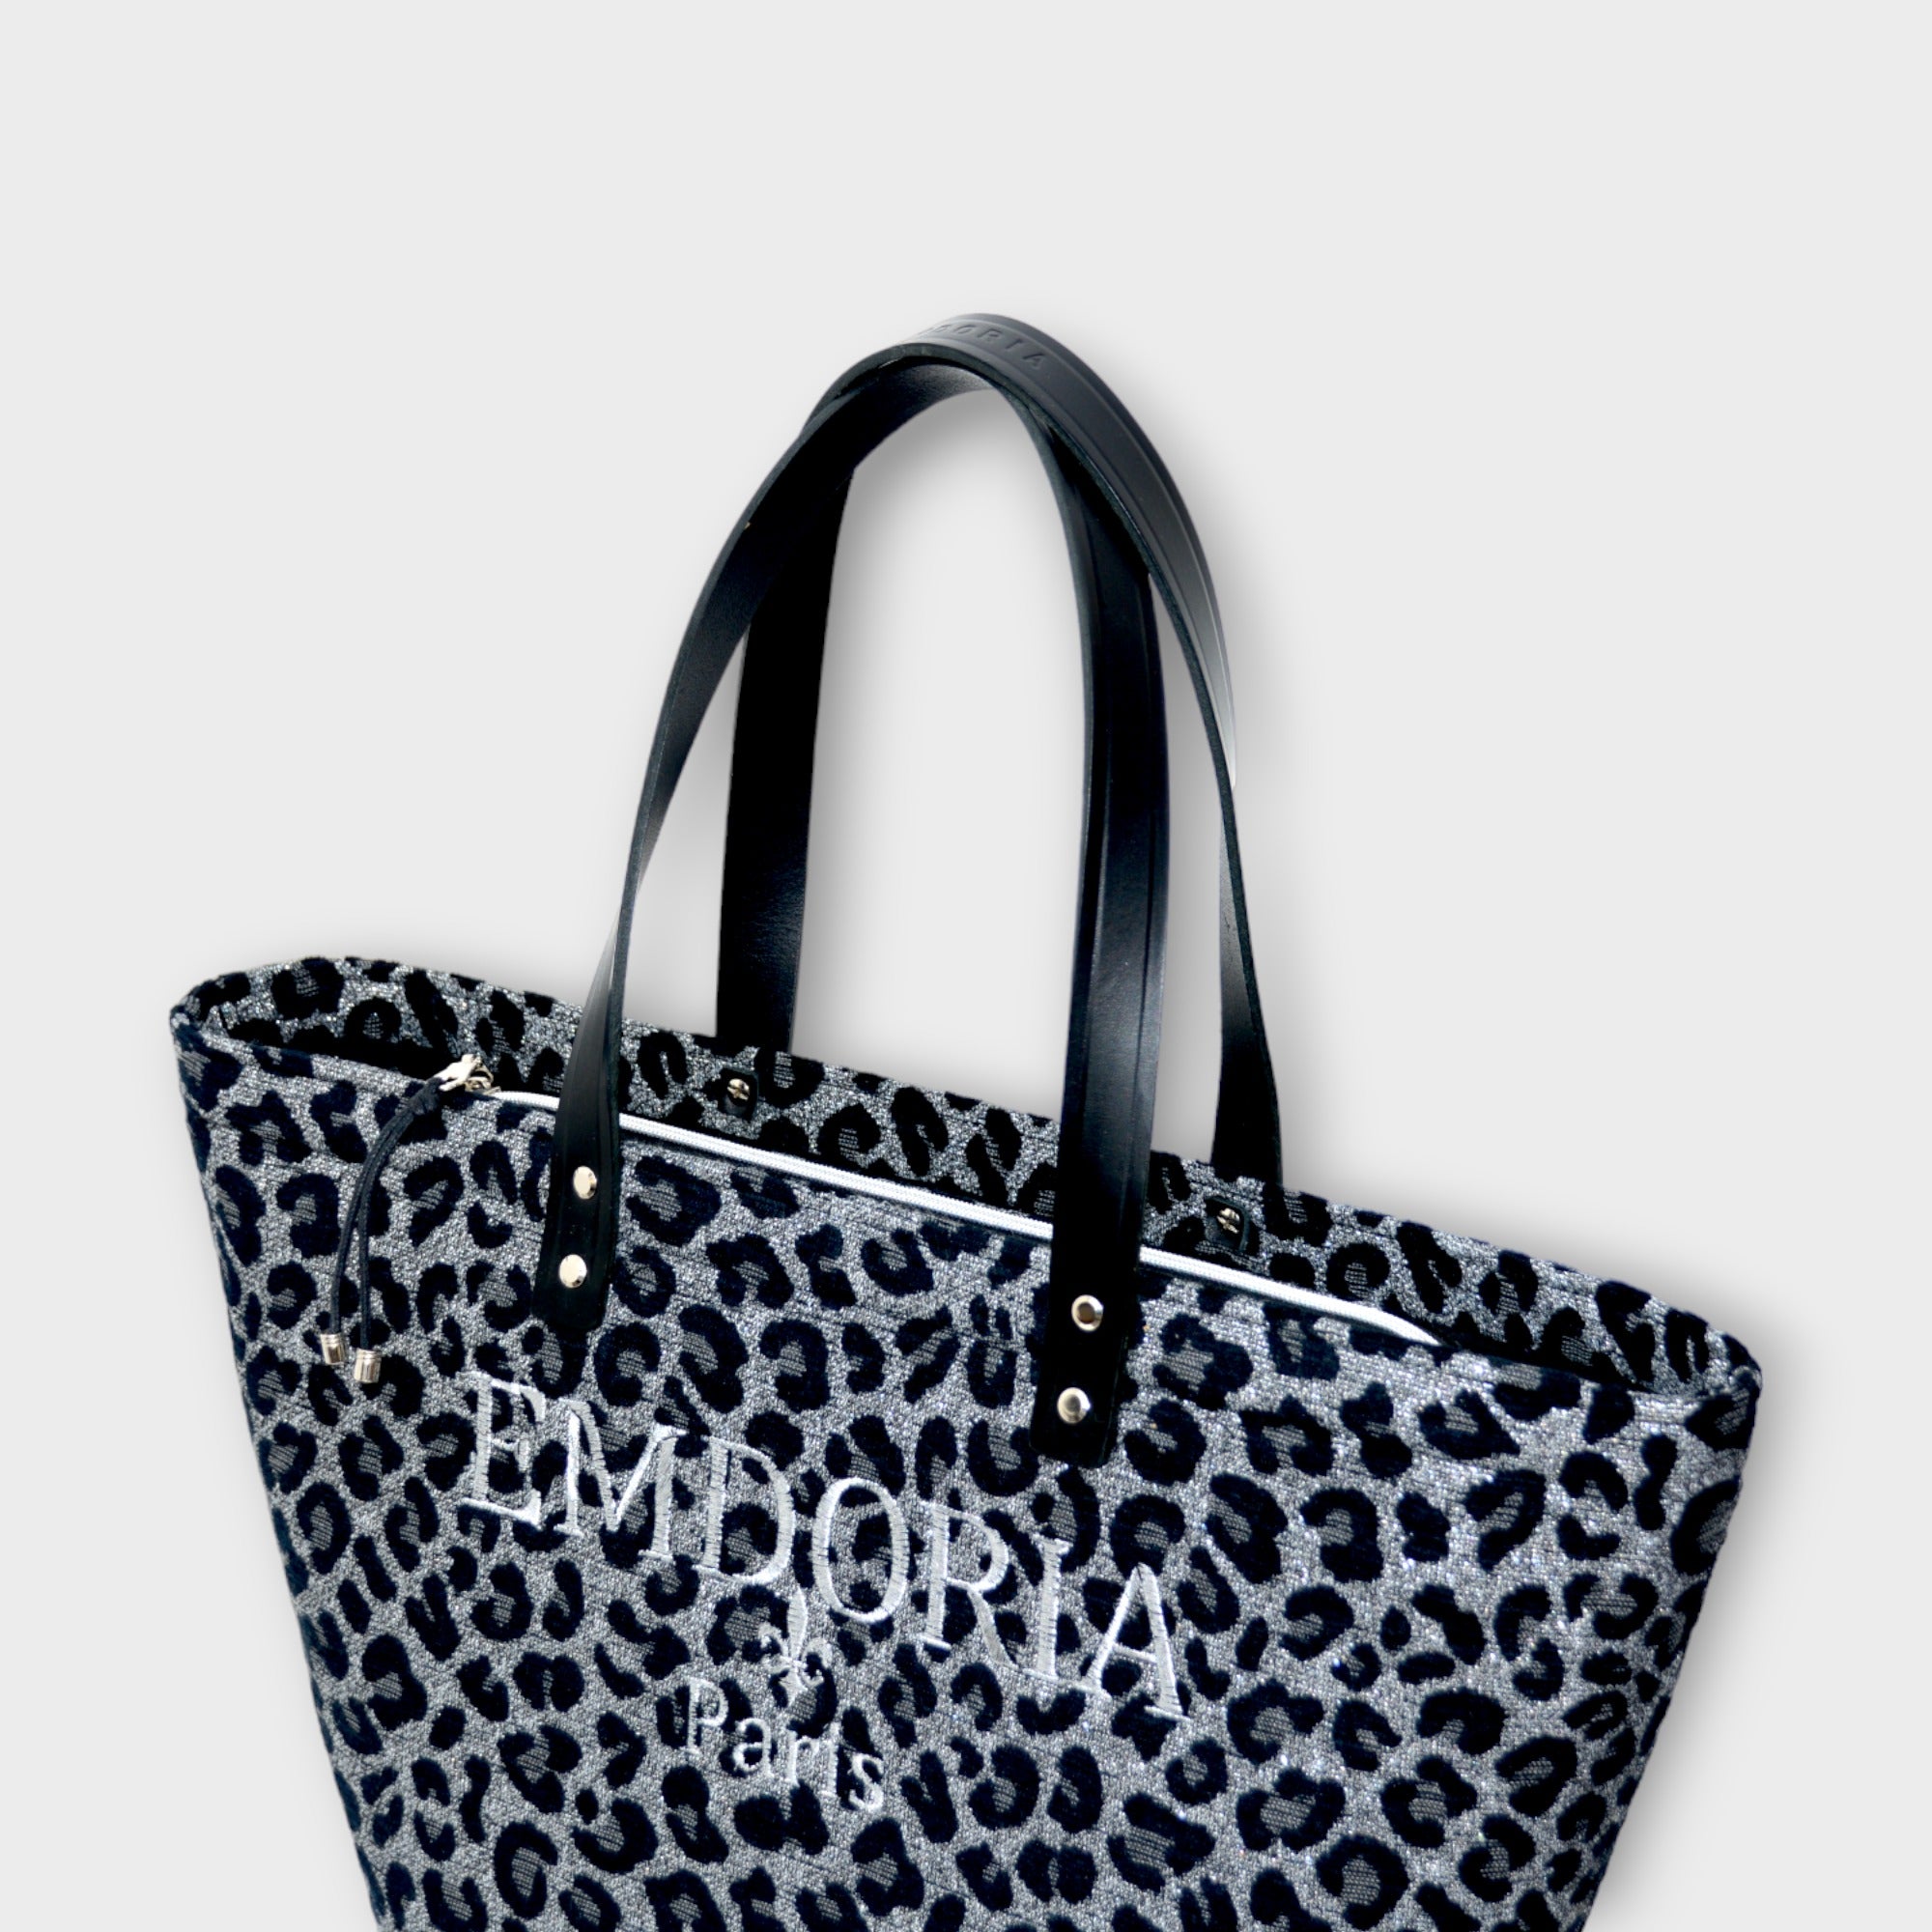 Sac à main fourre-tout shopping en tissu jacquard Leopard-Sacs à main- Jacquard-mallette-sac-EMDORIA PARIS